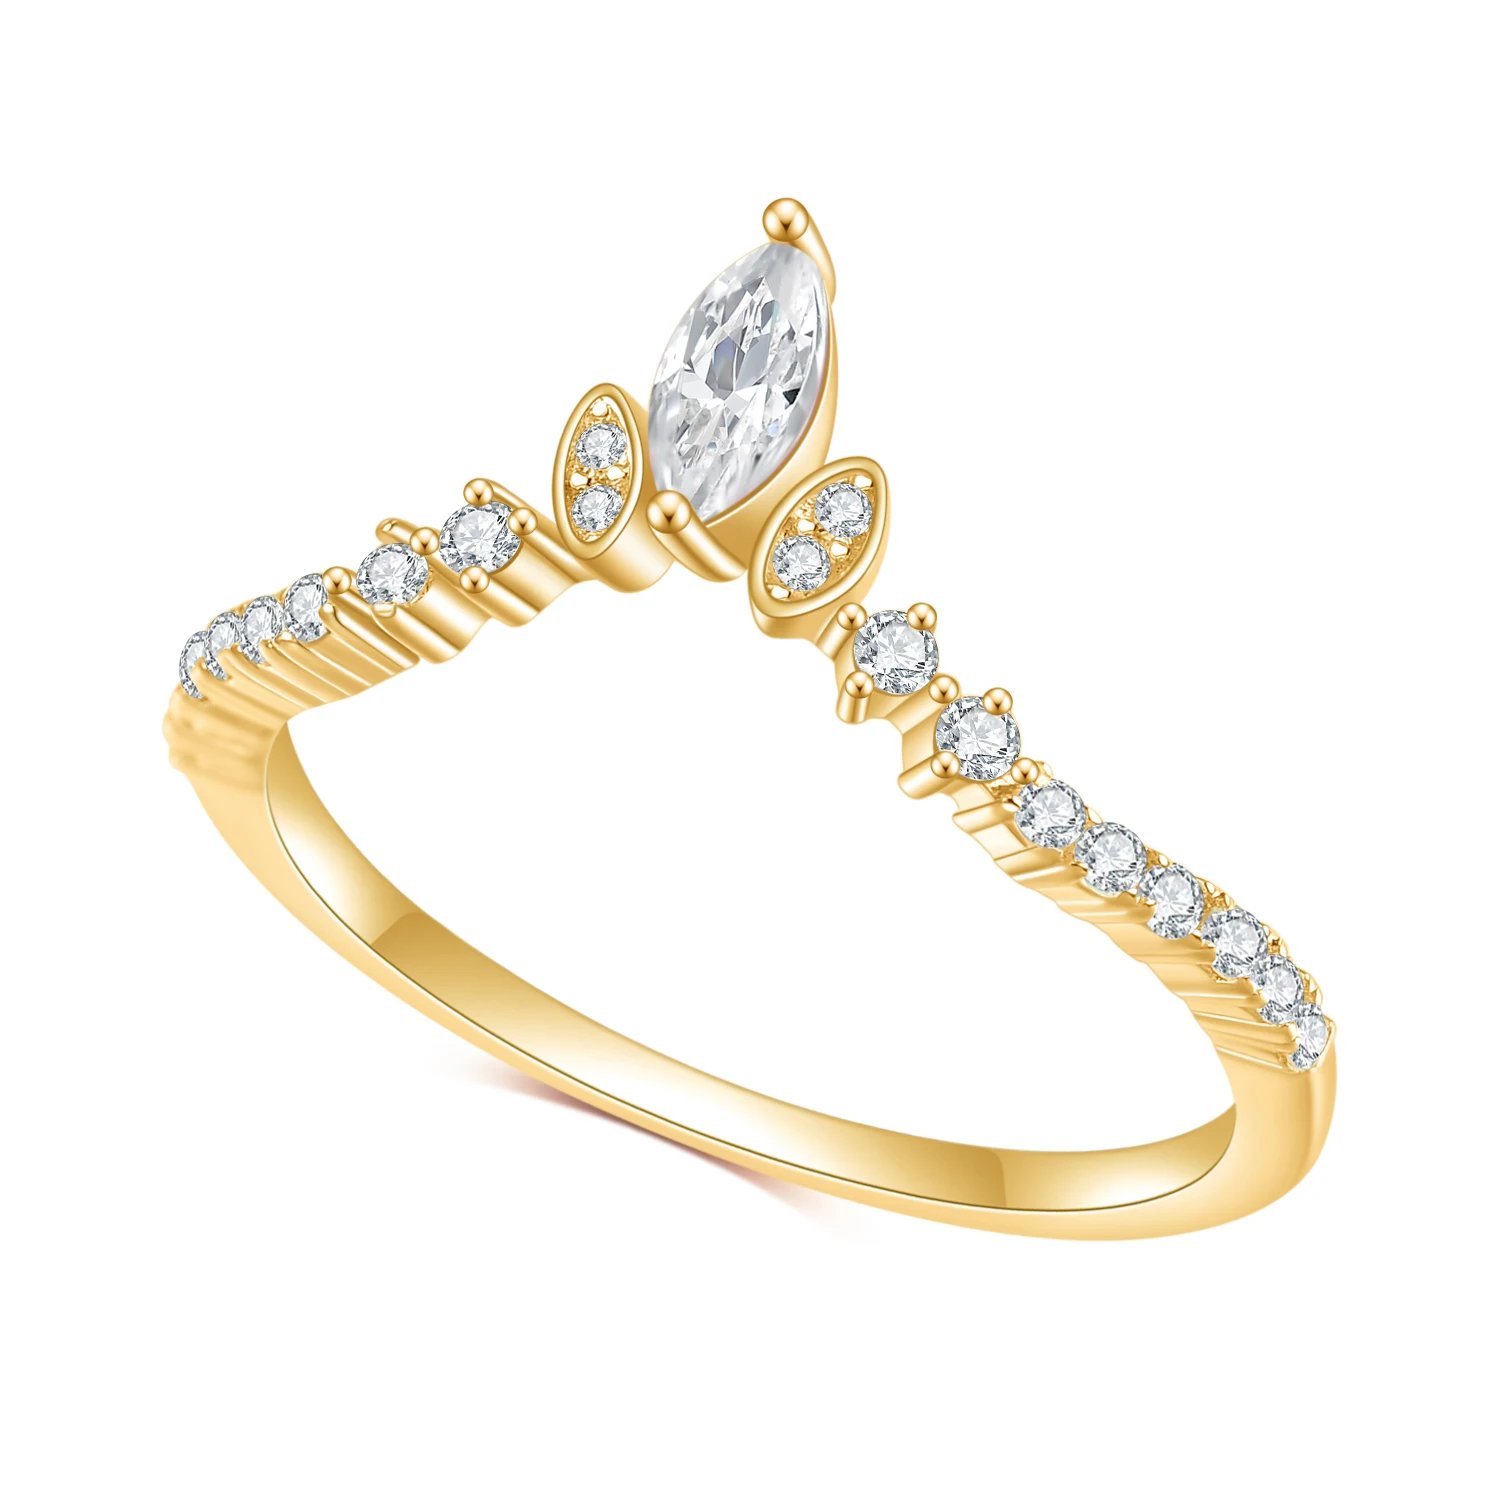 GEM'S BALLET 585 14K 10K 18K Gold 925 Silver Chevron Style Ring 0.316 DEW MARQUISE CUT Delicate Moissanite Wedding Band Rings